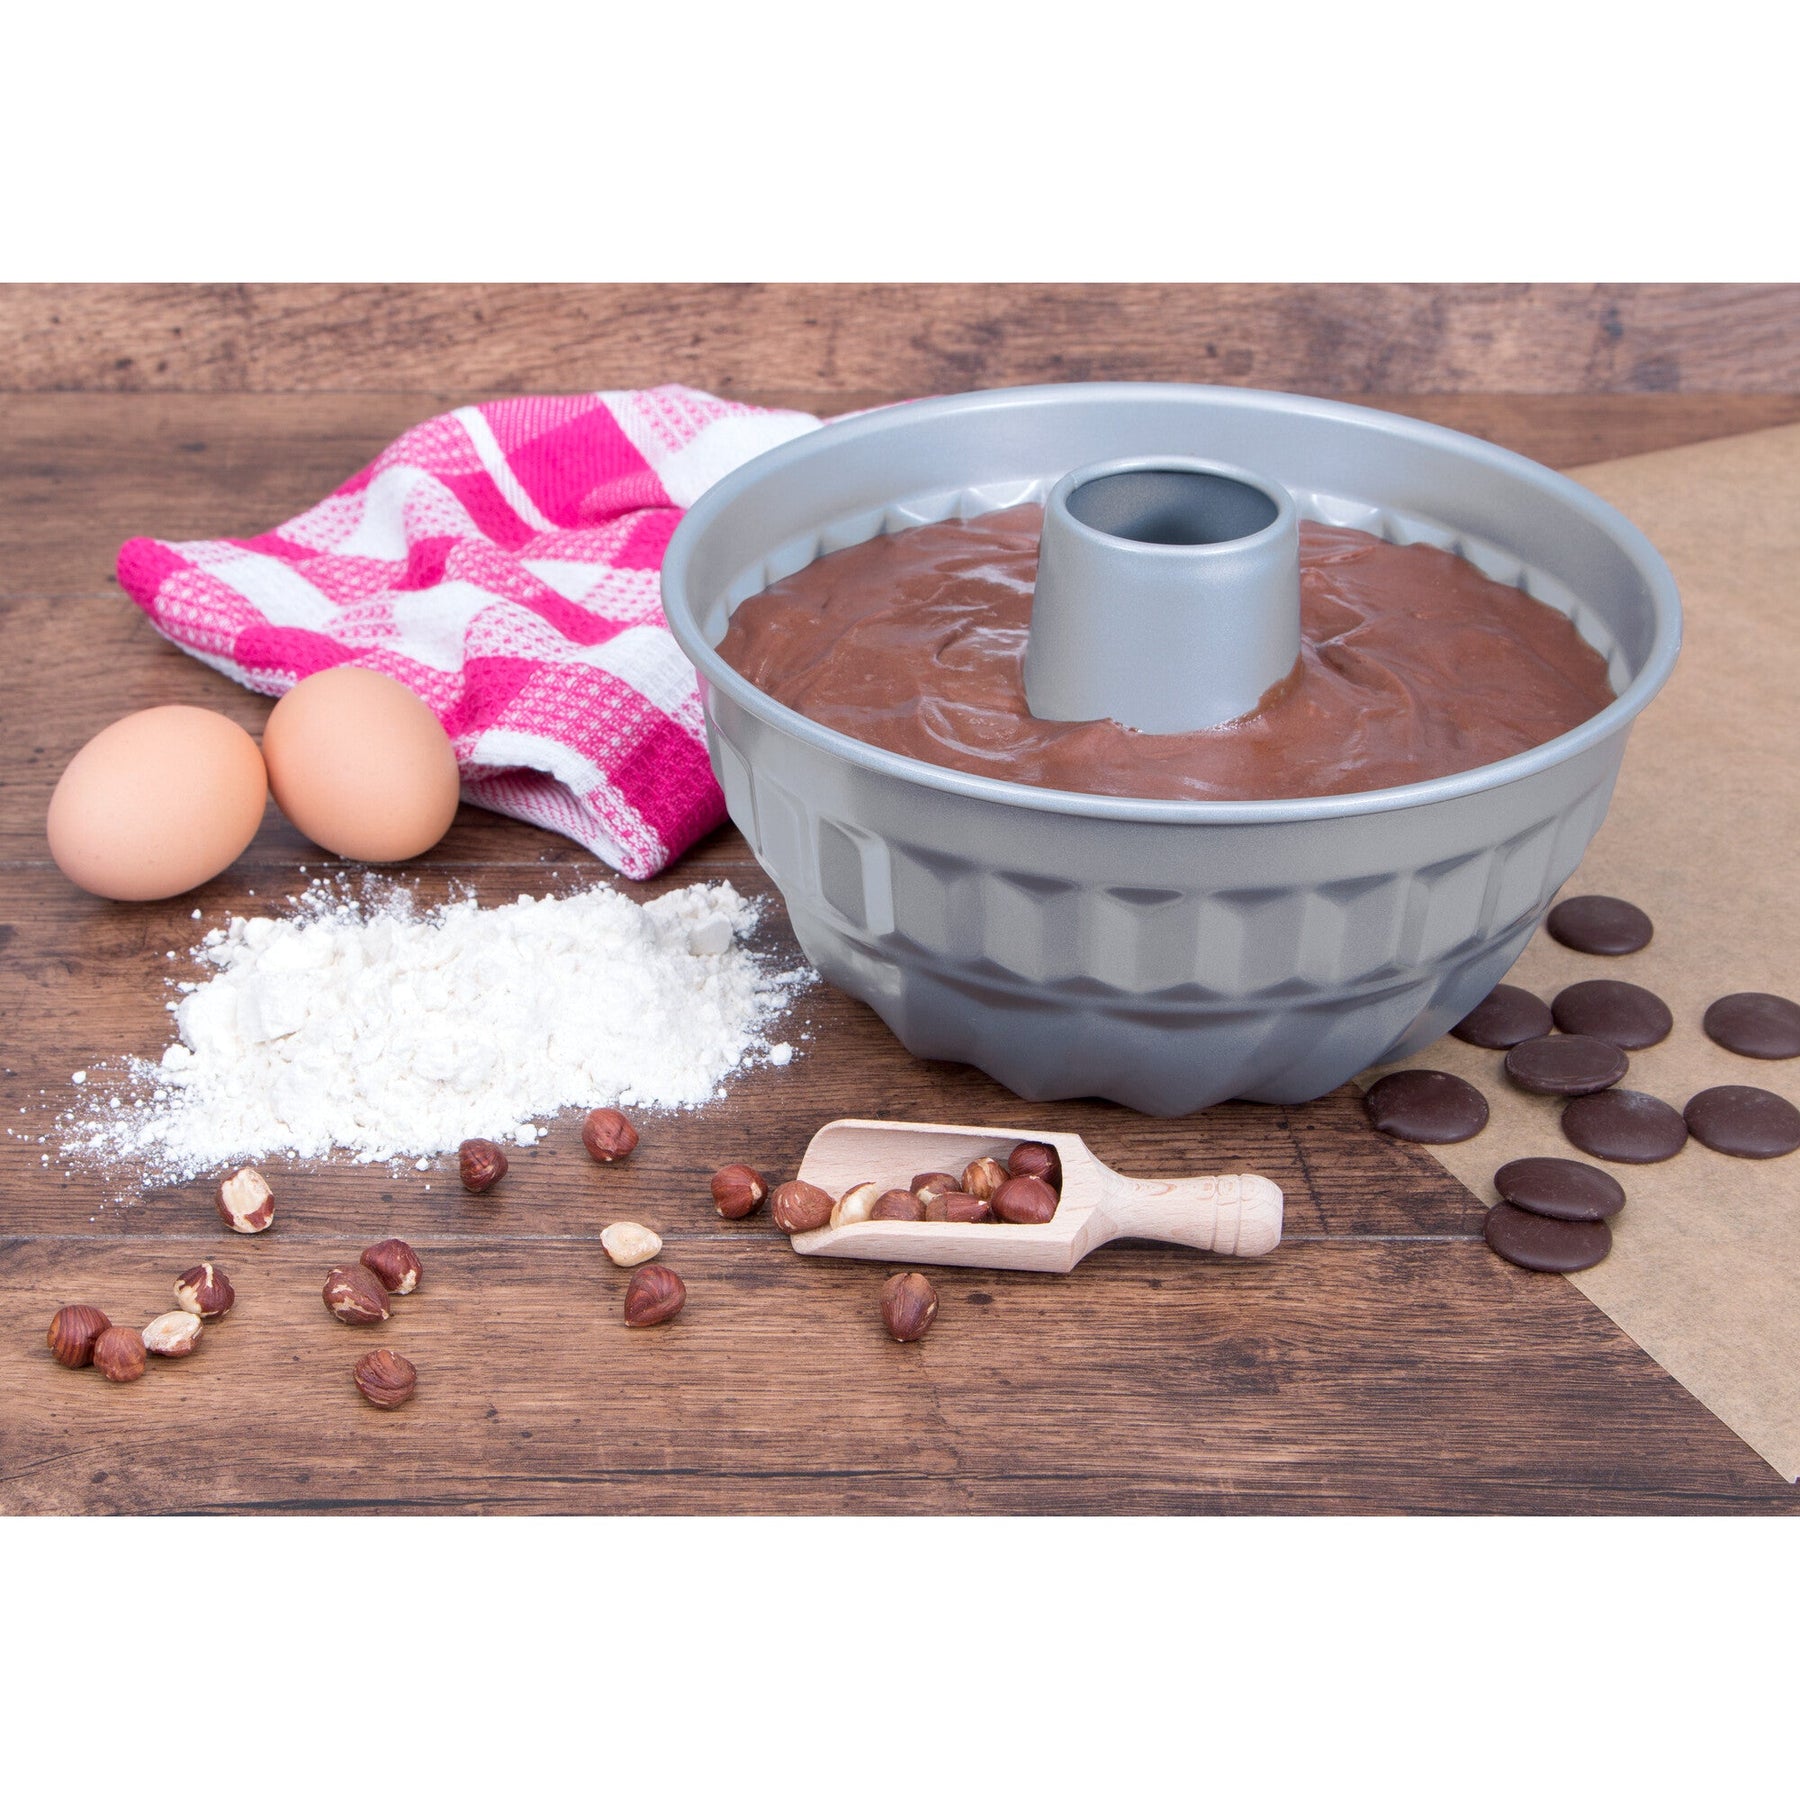 STADTER We love baking - 12 cups MINI BUNDT CAKE PAN